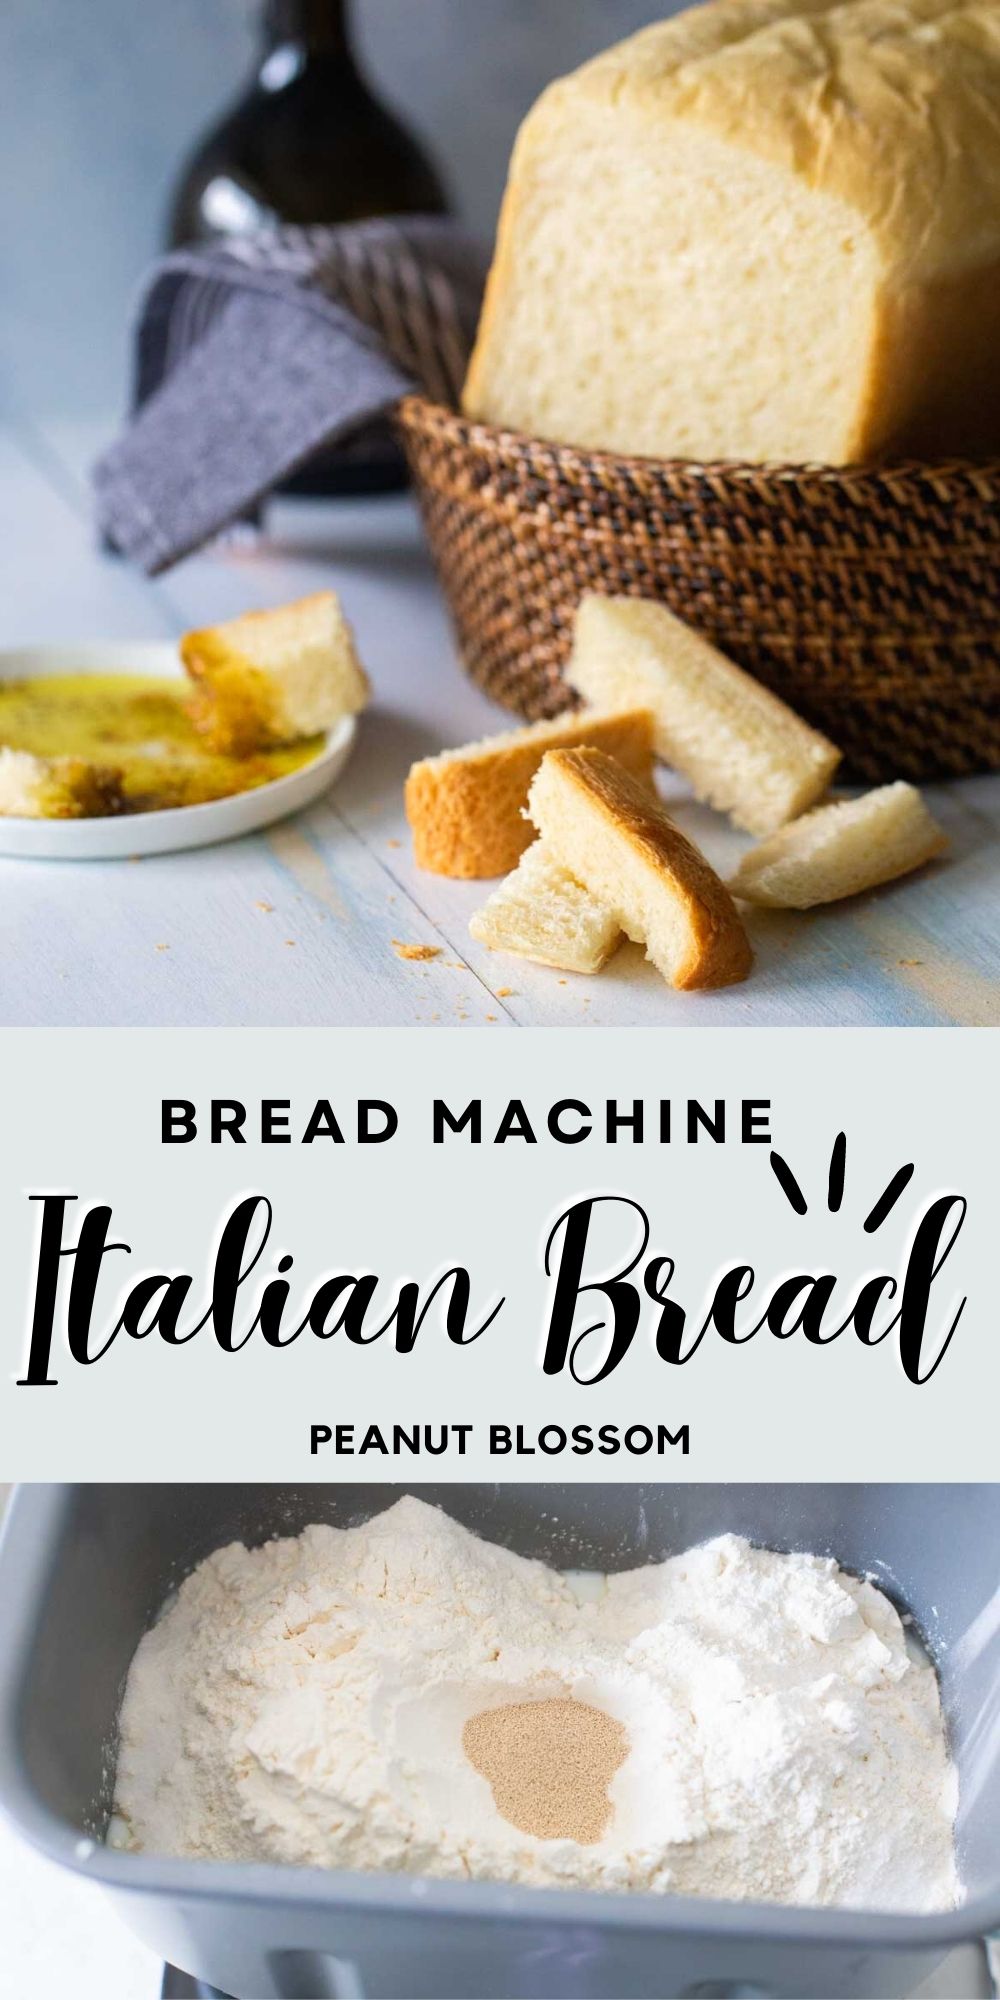 https://www.peanutblossom.com/wp-content/uploads/2021/08/breadmachineitalianbread.jpg